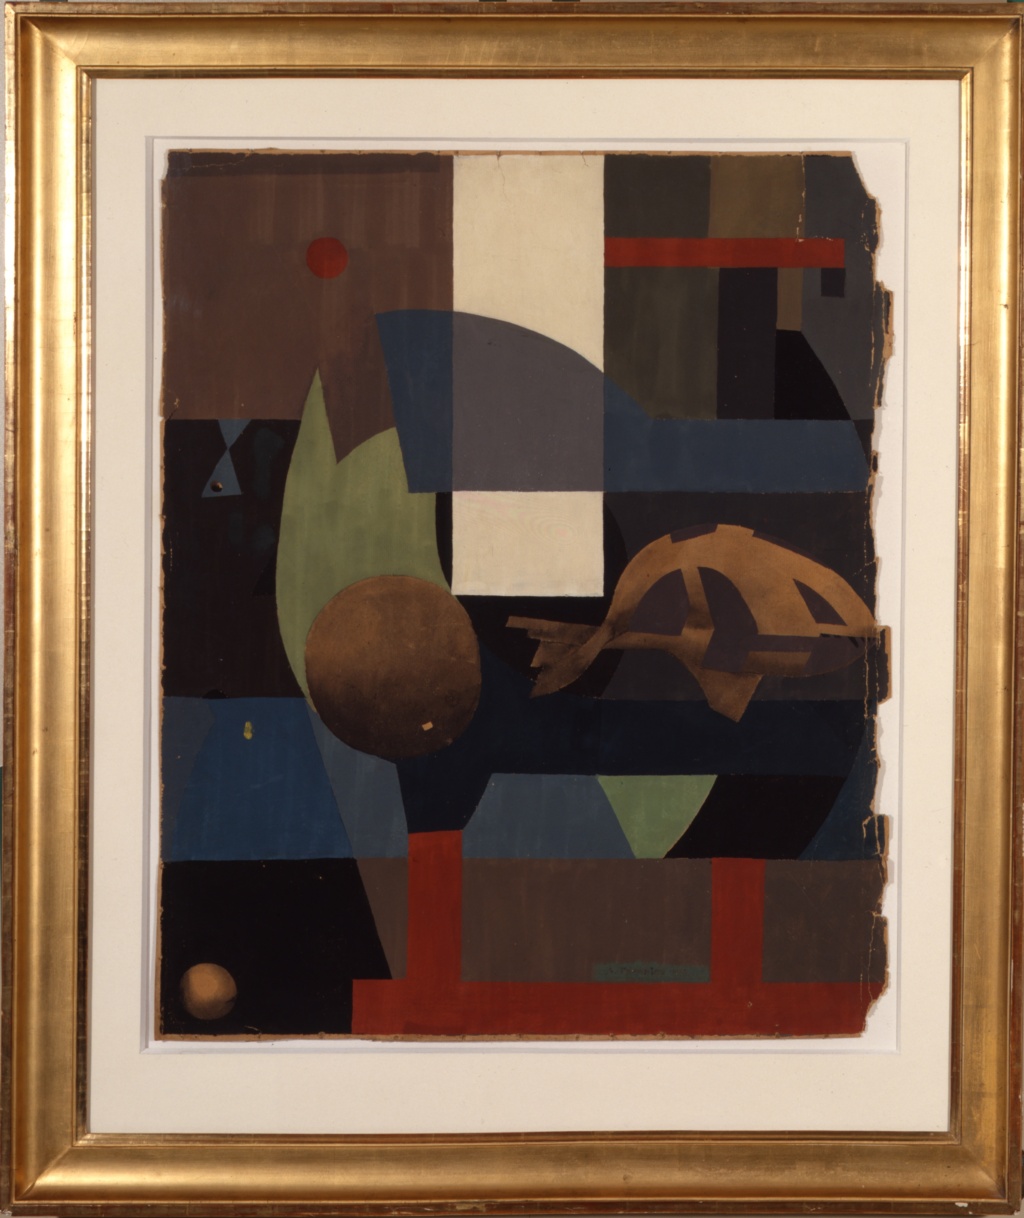 André Thomkins, Untitled, 1953
Tempera, Aquarell on cardboard 
81,5 x 67,5 cm